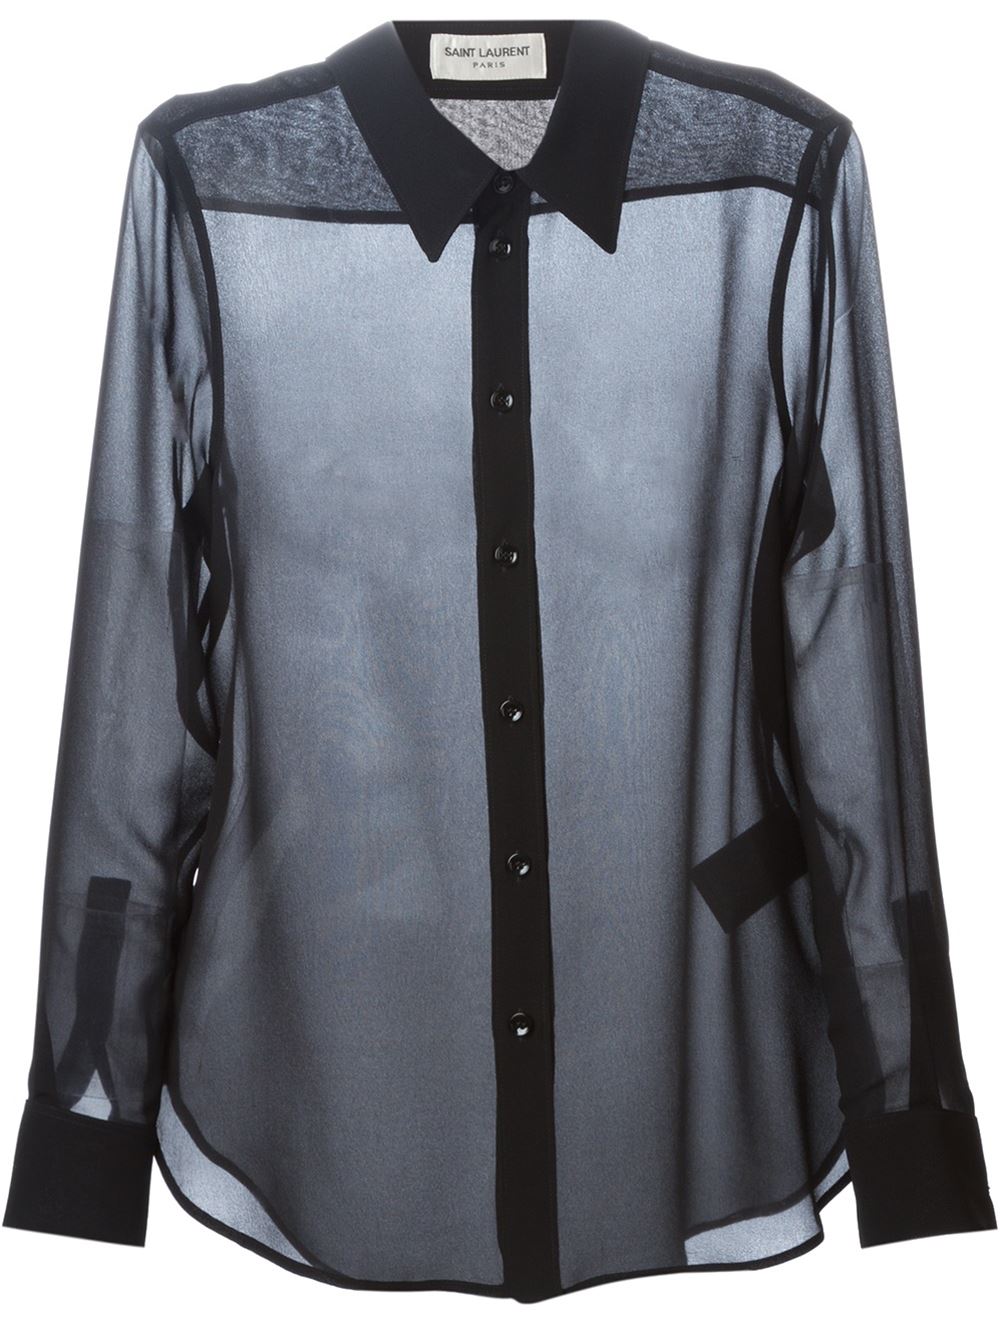 black silk sheer Saint Laurent blouse